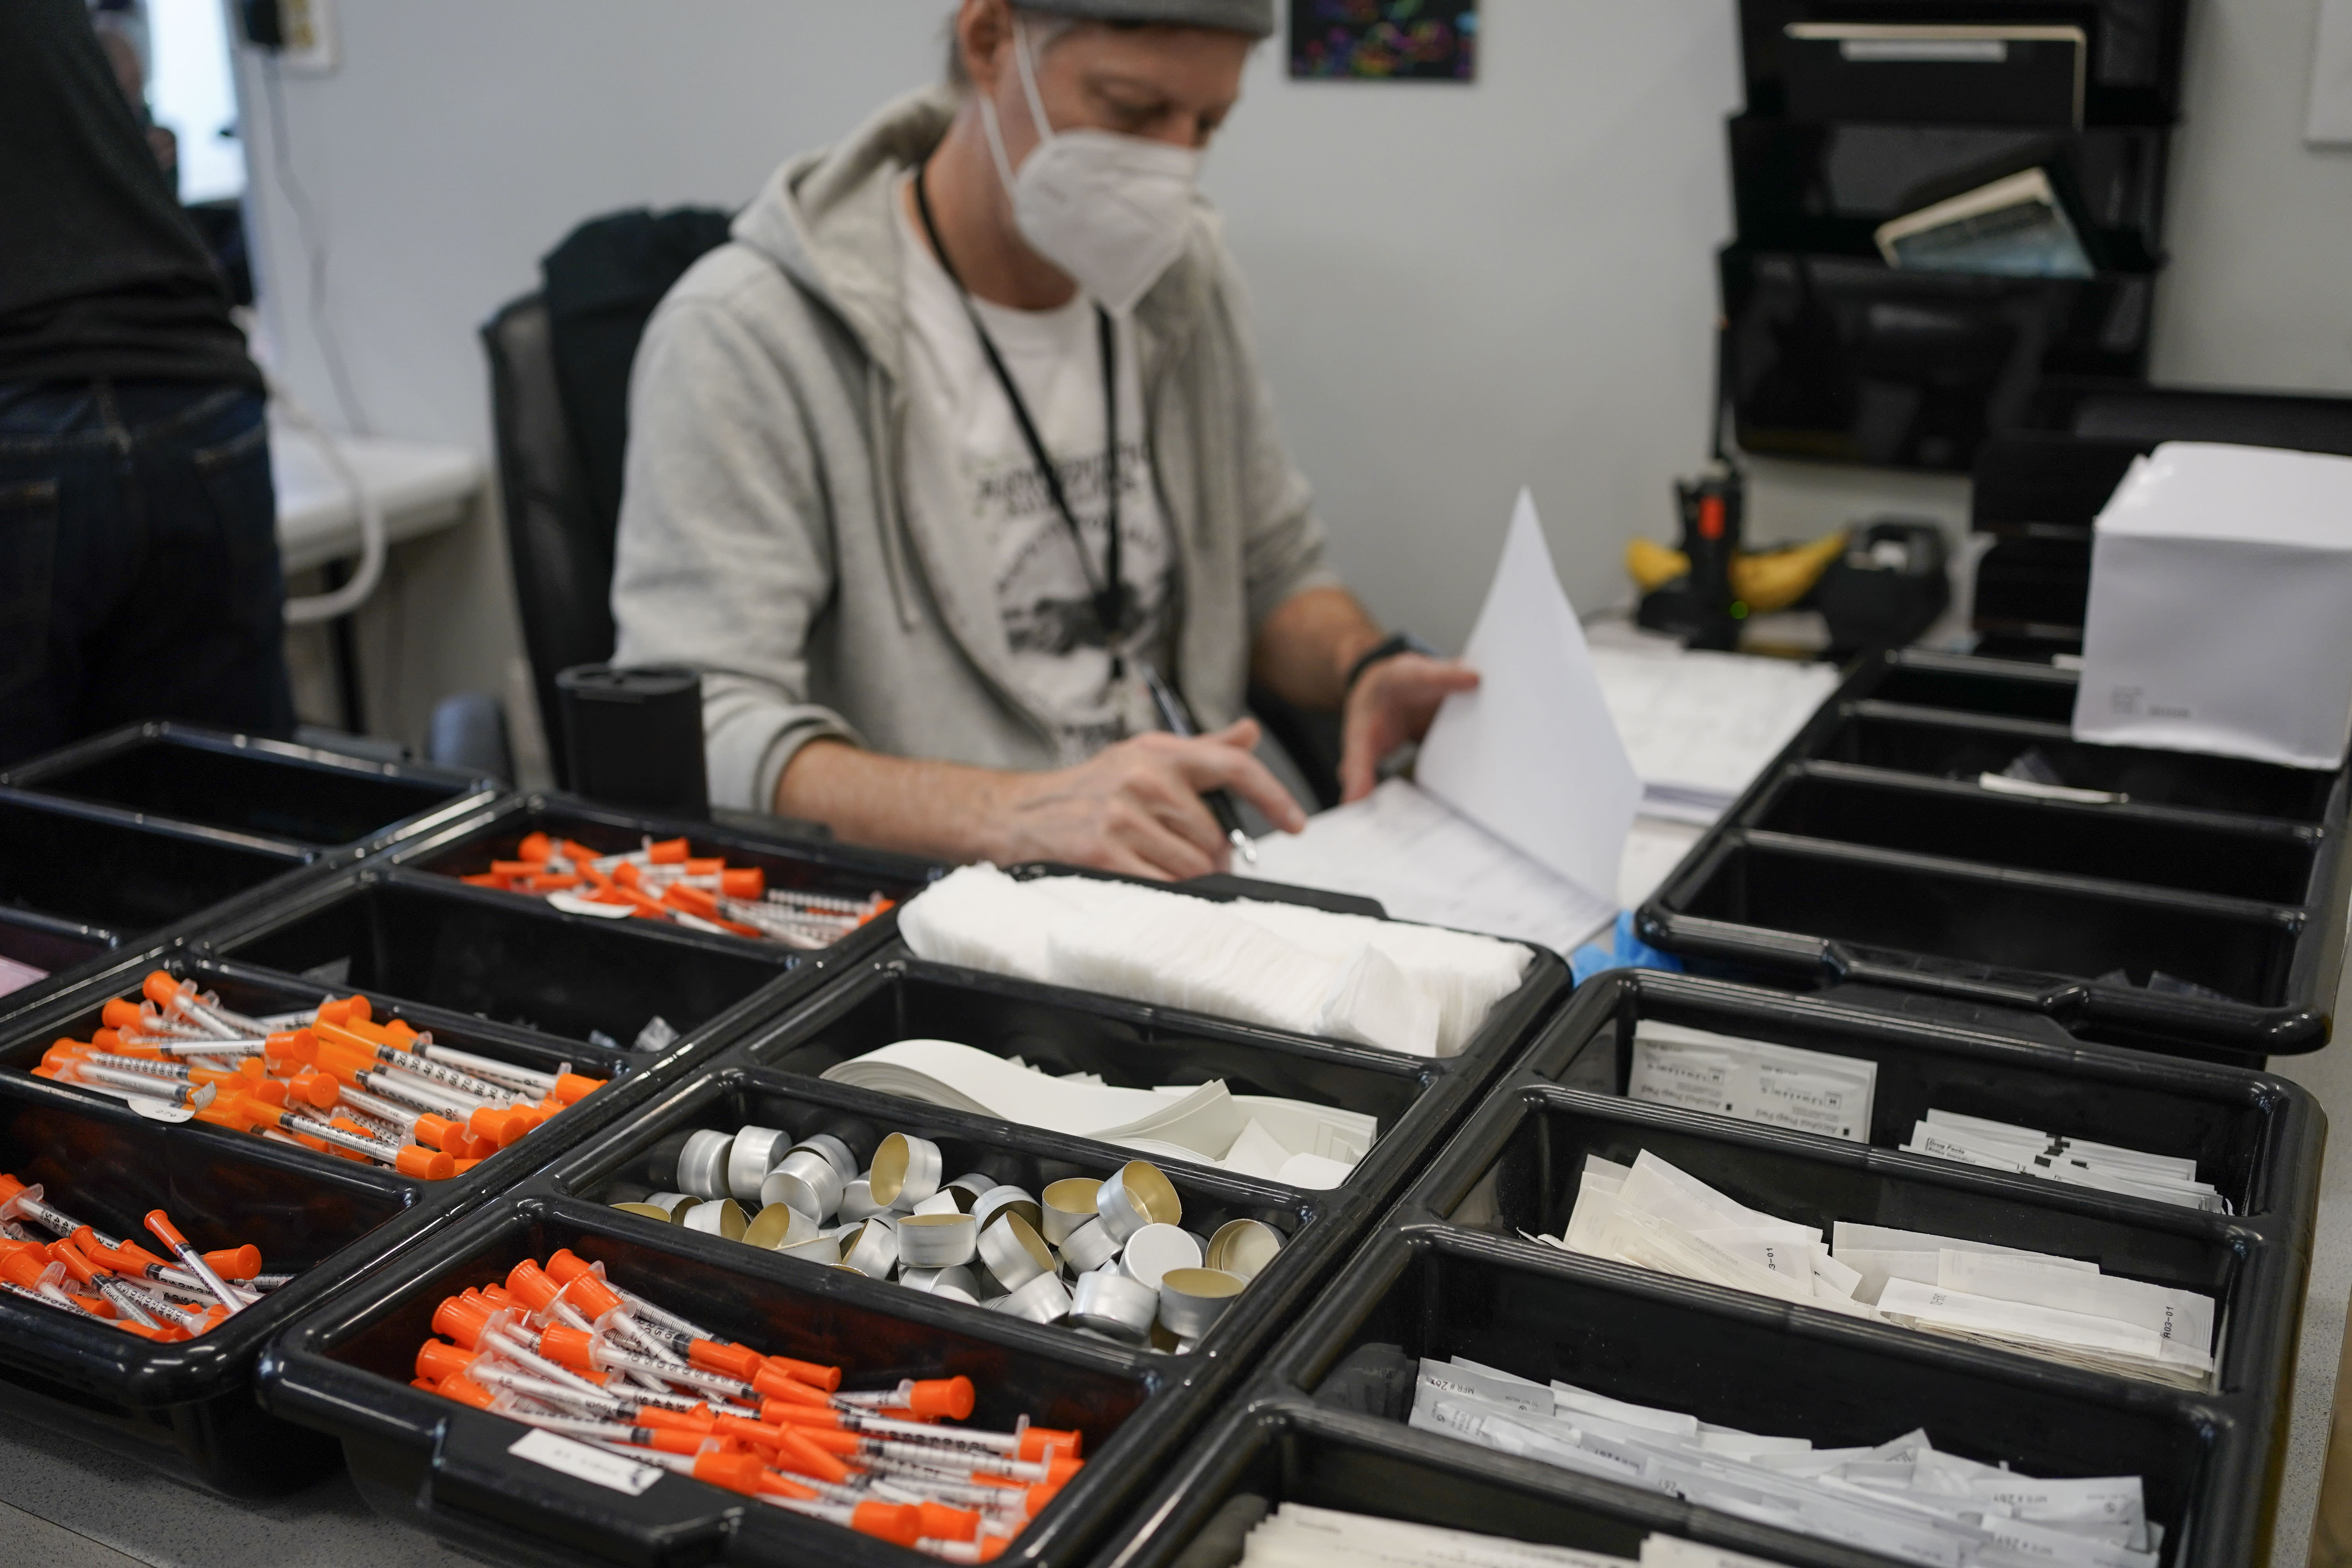 Overdose prevention centers could move forward in Massachusetts under Senate bill